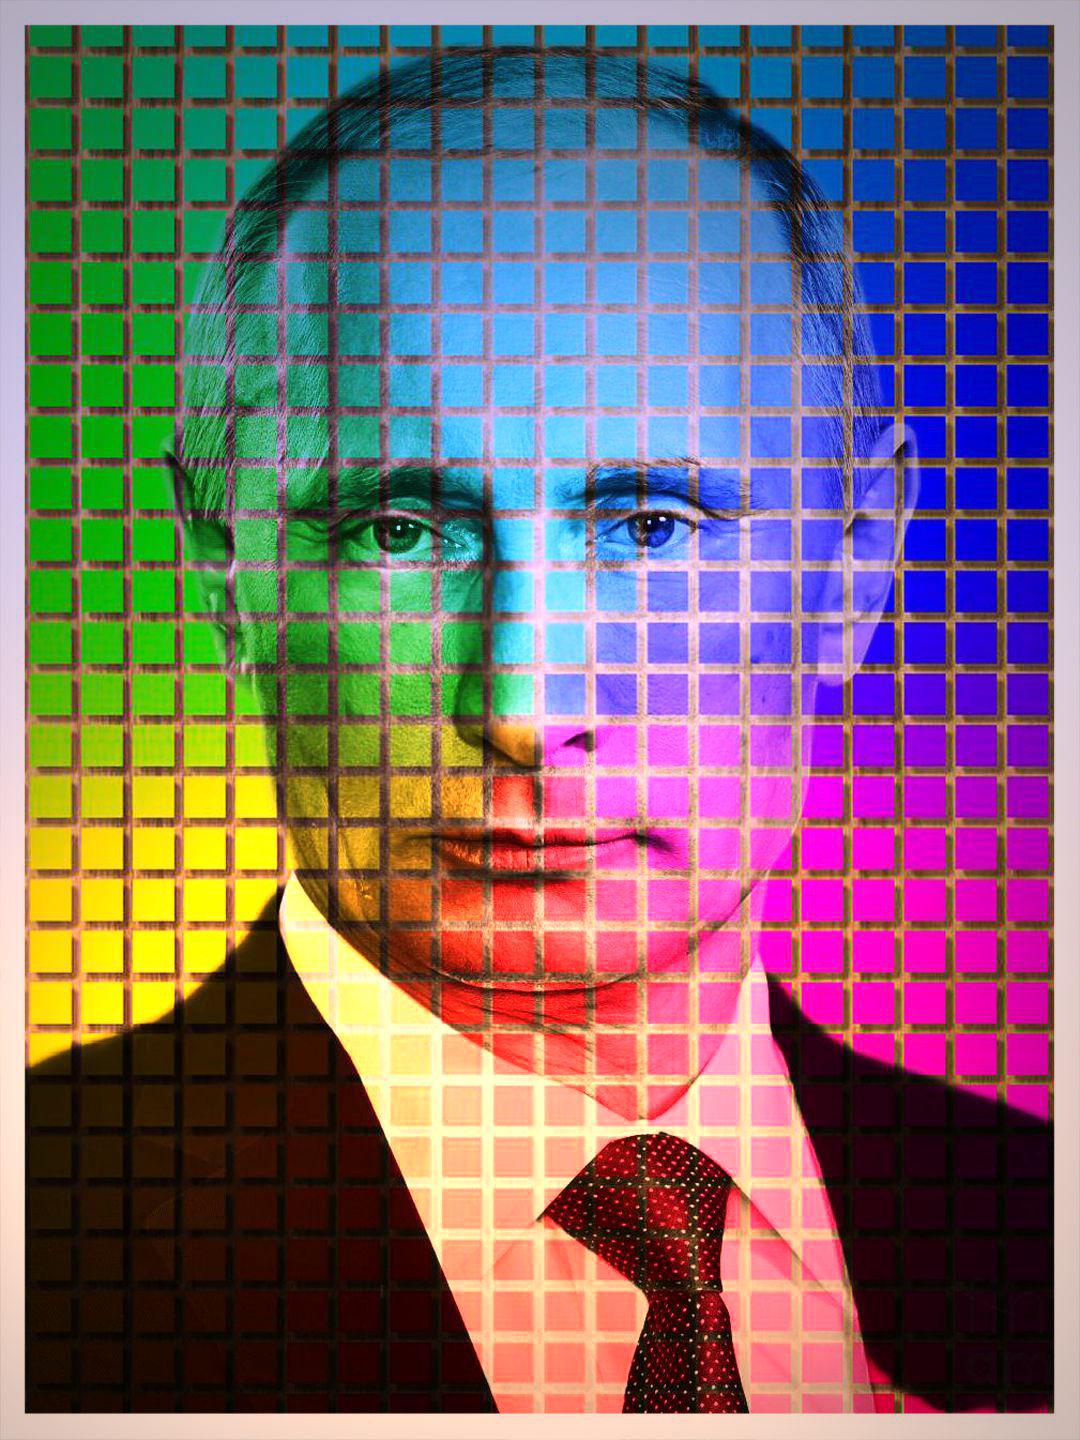 Anjelica Russian Threesome - Vladimir Vladimirovich Putin - Celeb ART - Beautiful Artworks of  Celebrities, Footballers, Politicians and Famous People in World | OpenSea